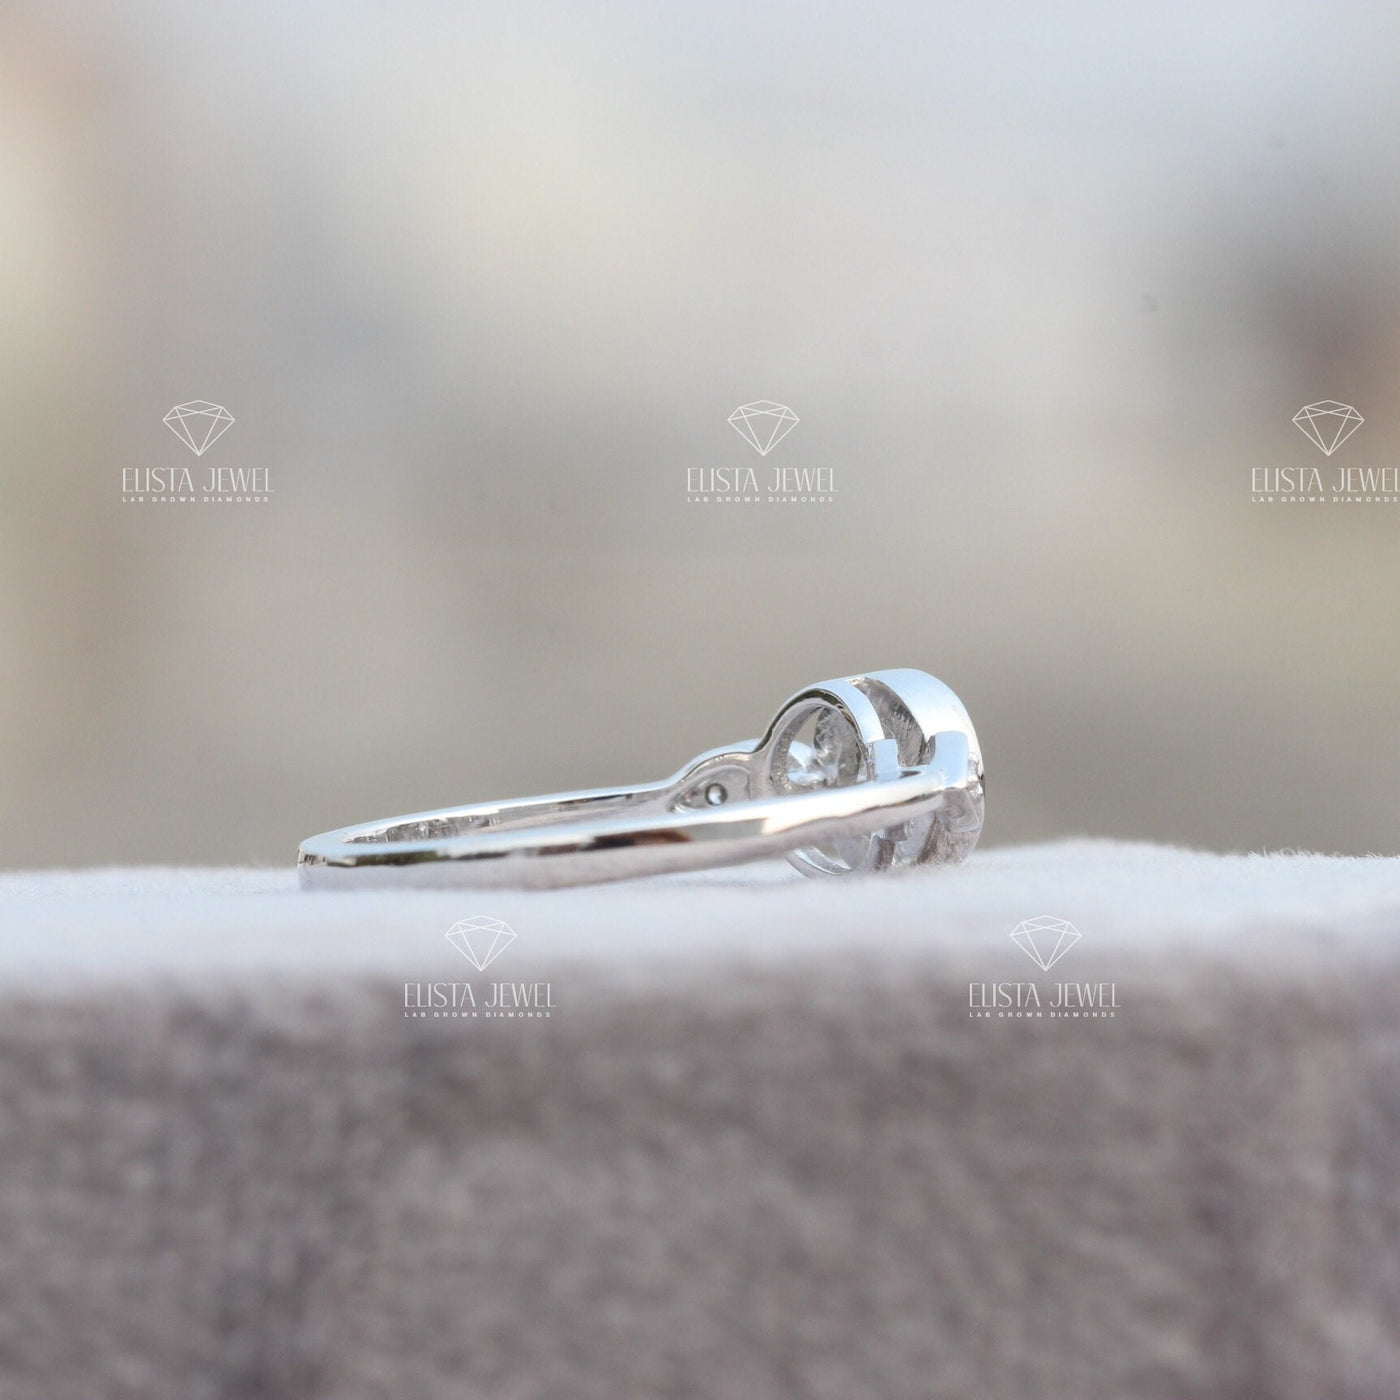 Dainty Certified Round Diamond Set In Full Bezel Platinum Engagement Ring For Her